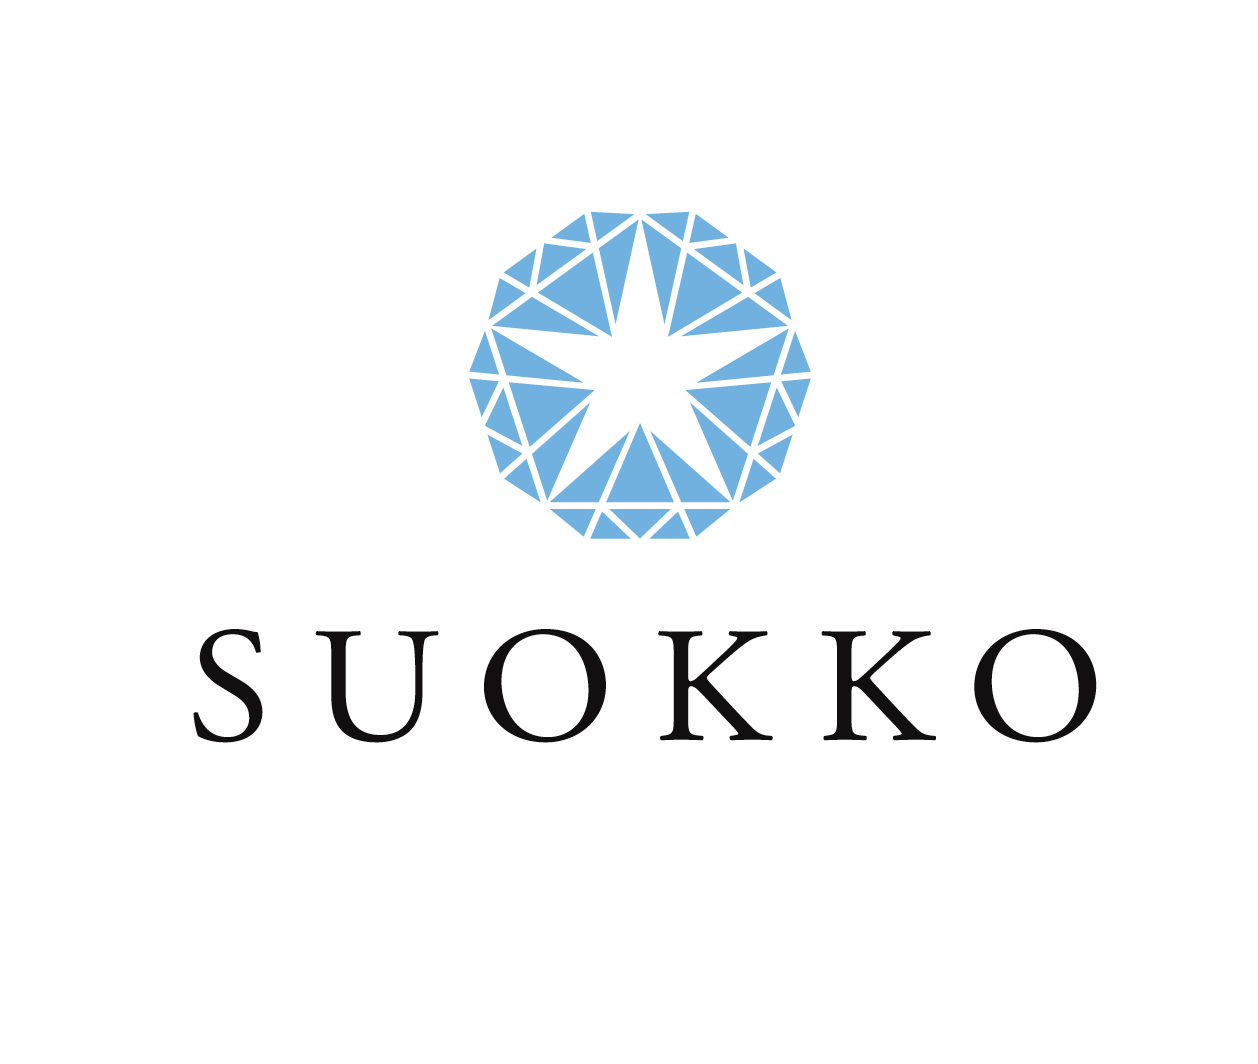 Suokko logo